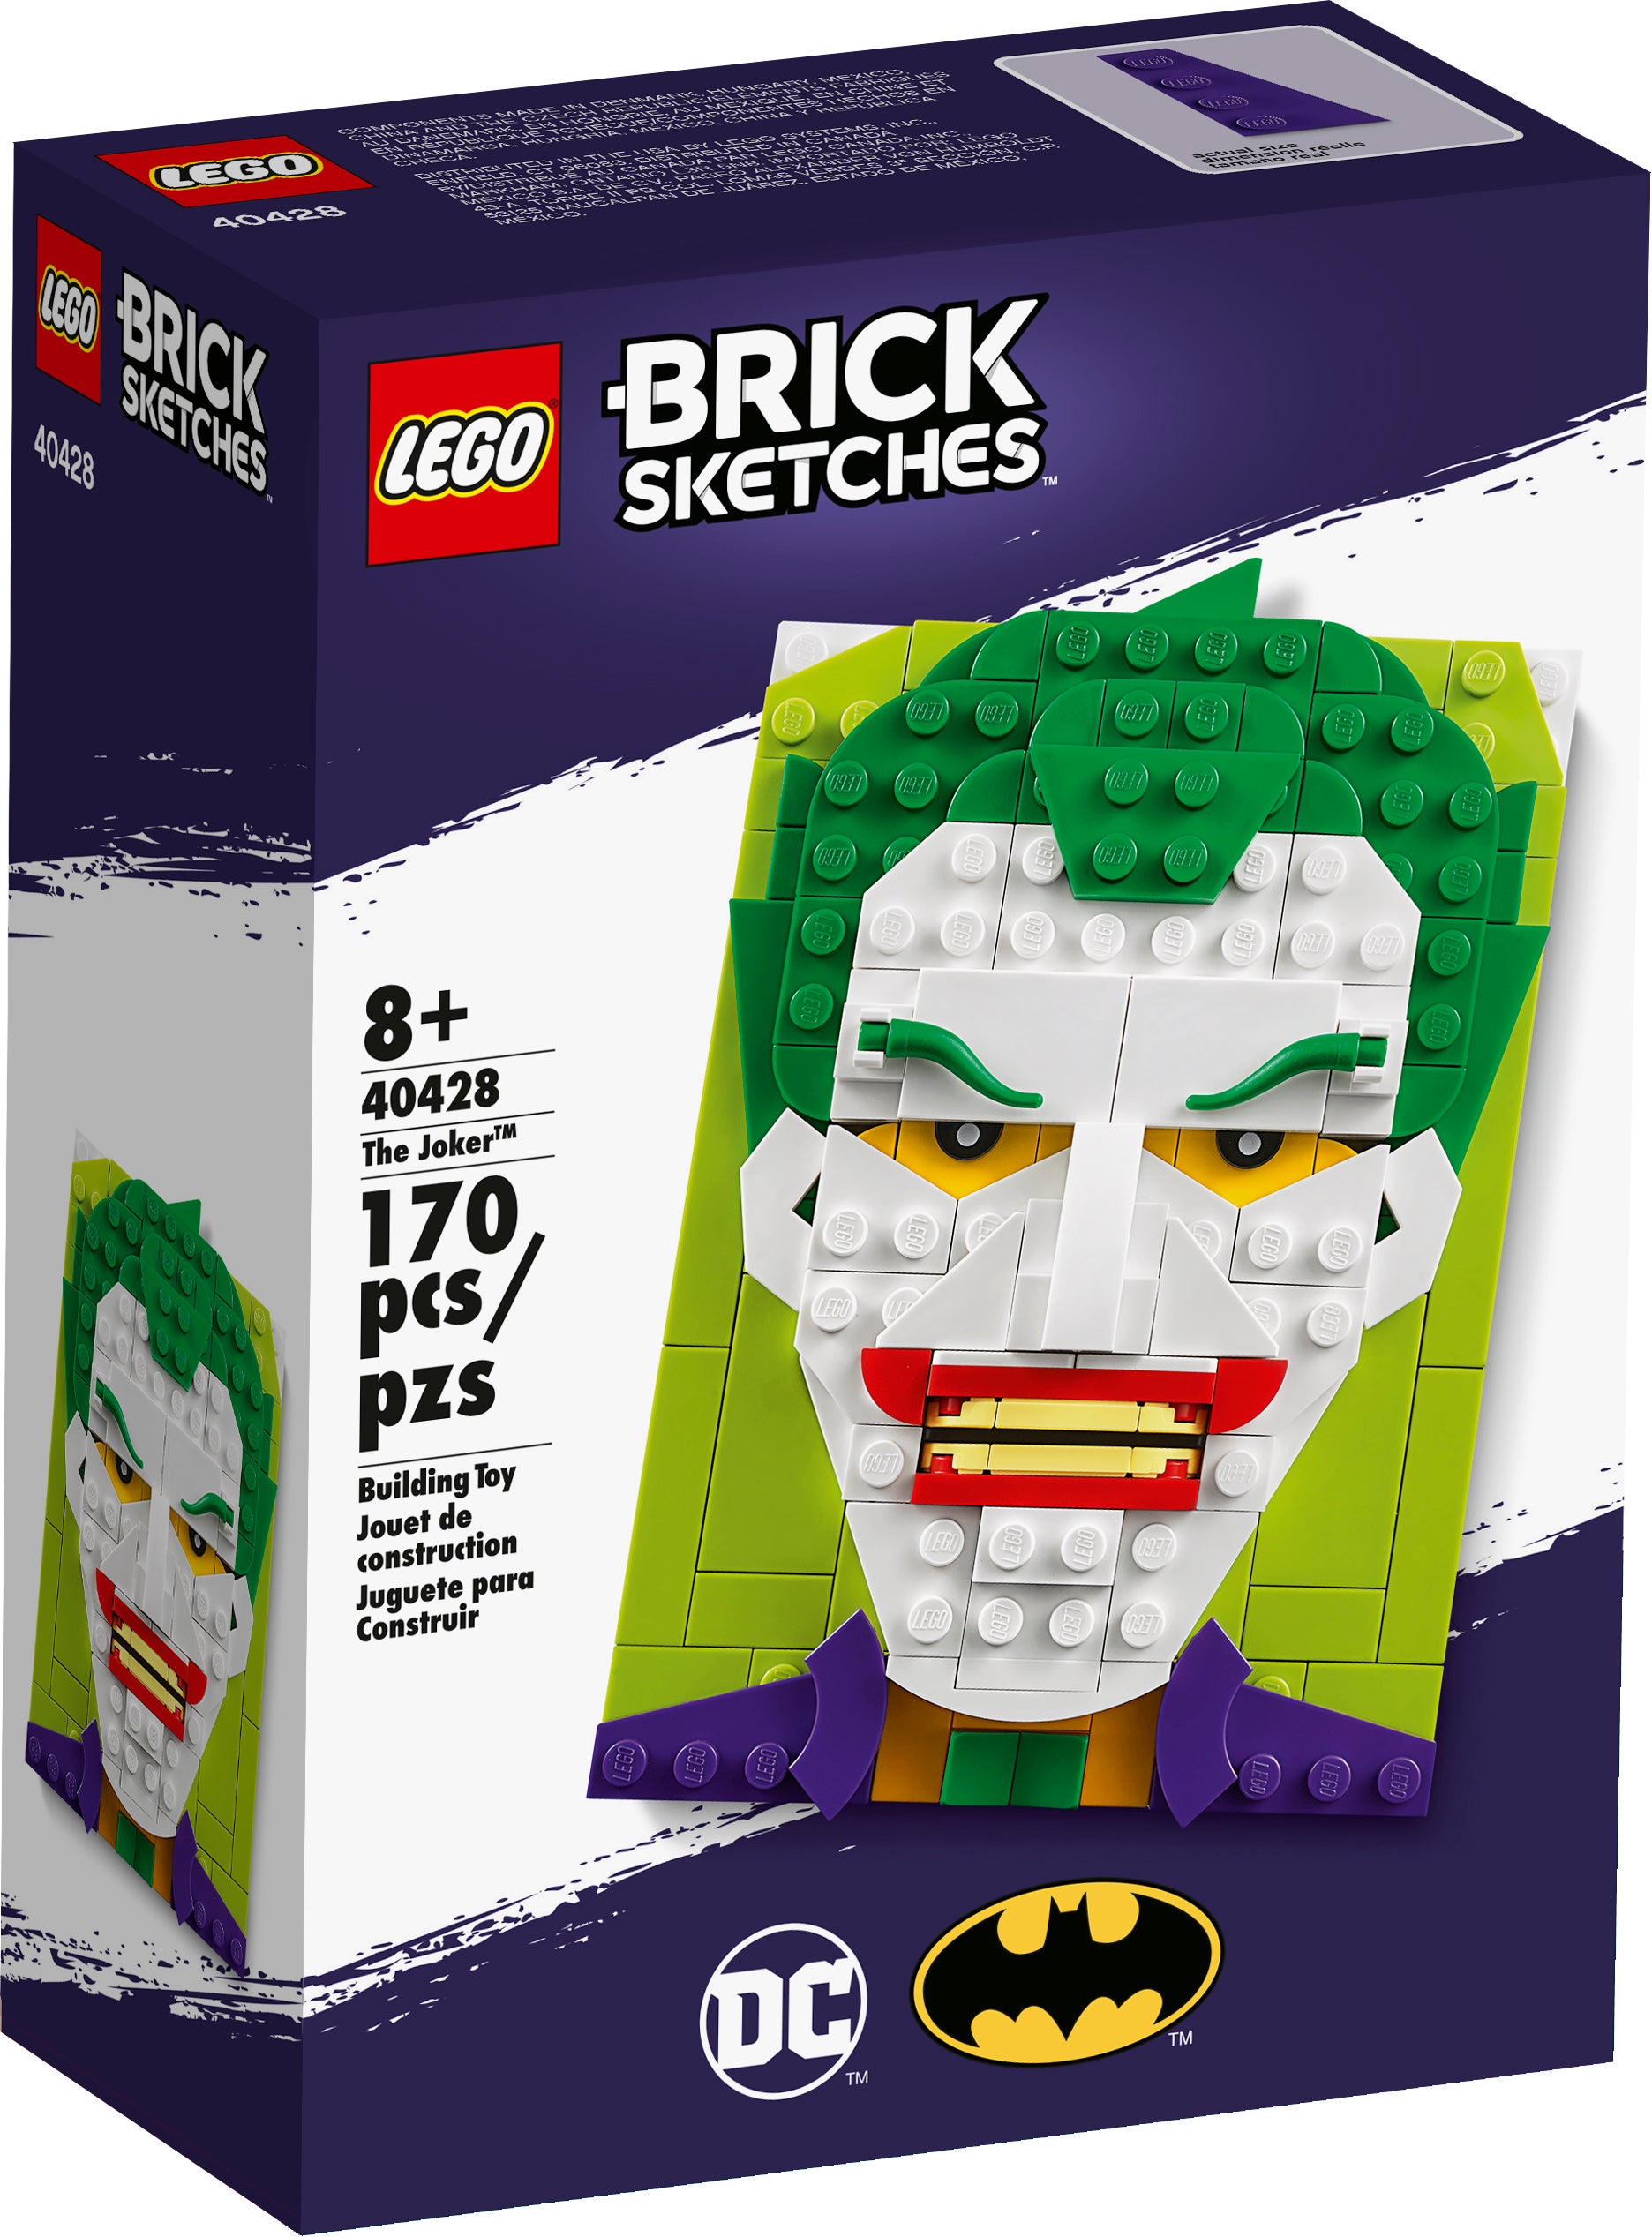 40428 Free Shipping! DC Comics New LEGO Brick Sketches The Joker 